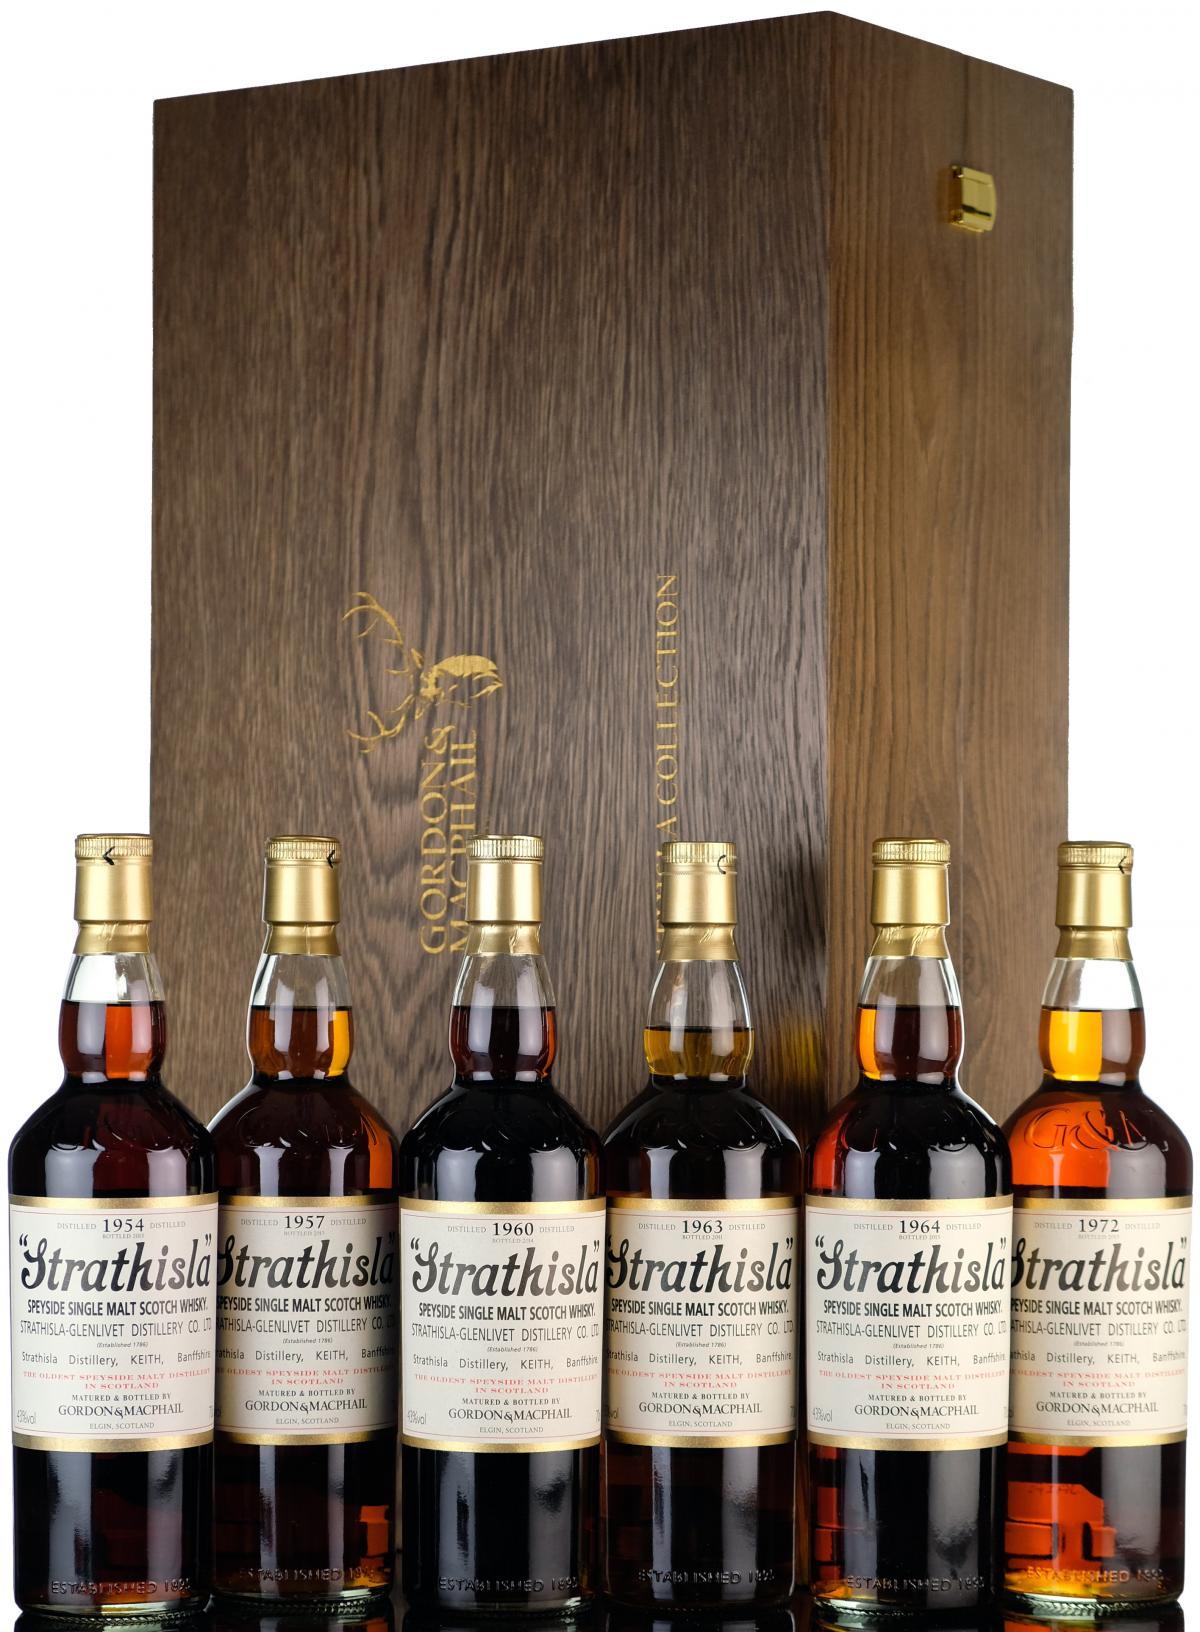 Gordon & MacPhail, Strathisla, Rare, Vintage, Collection 2018, Speyside Single Malt Scotch Whisky, 1954, 1957, 1960, 1963, 1964, 1972,